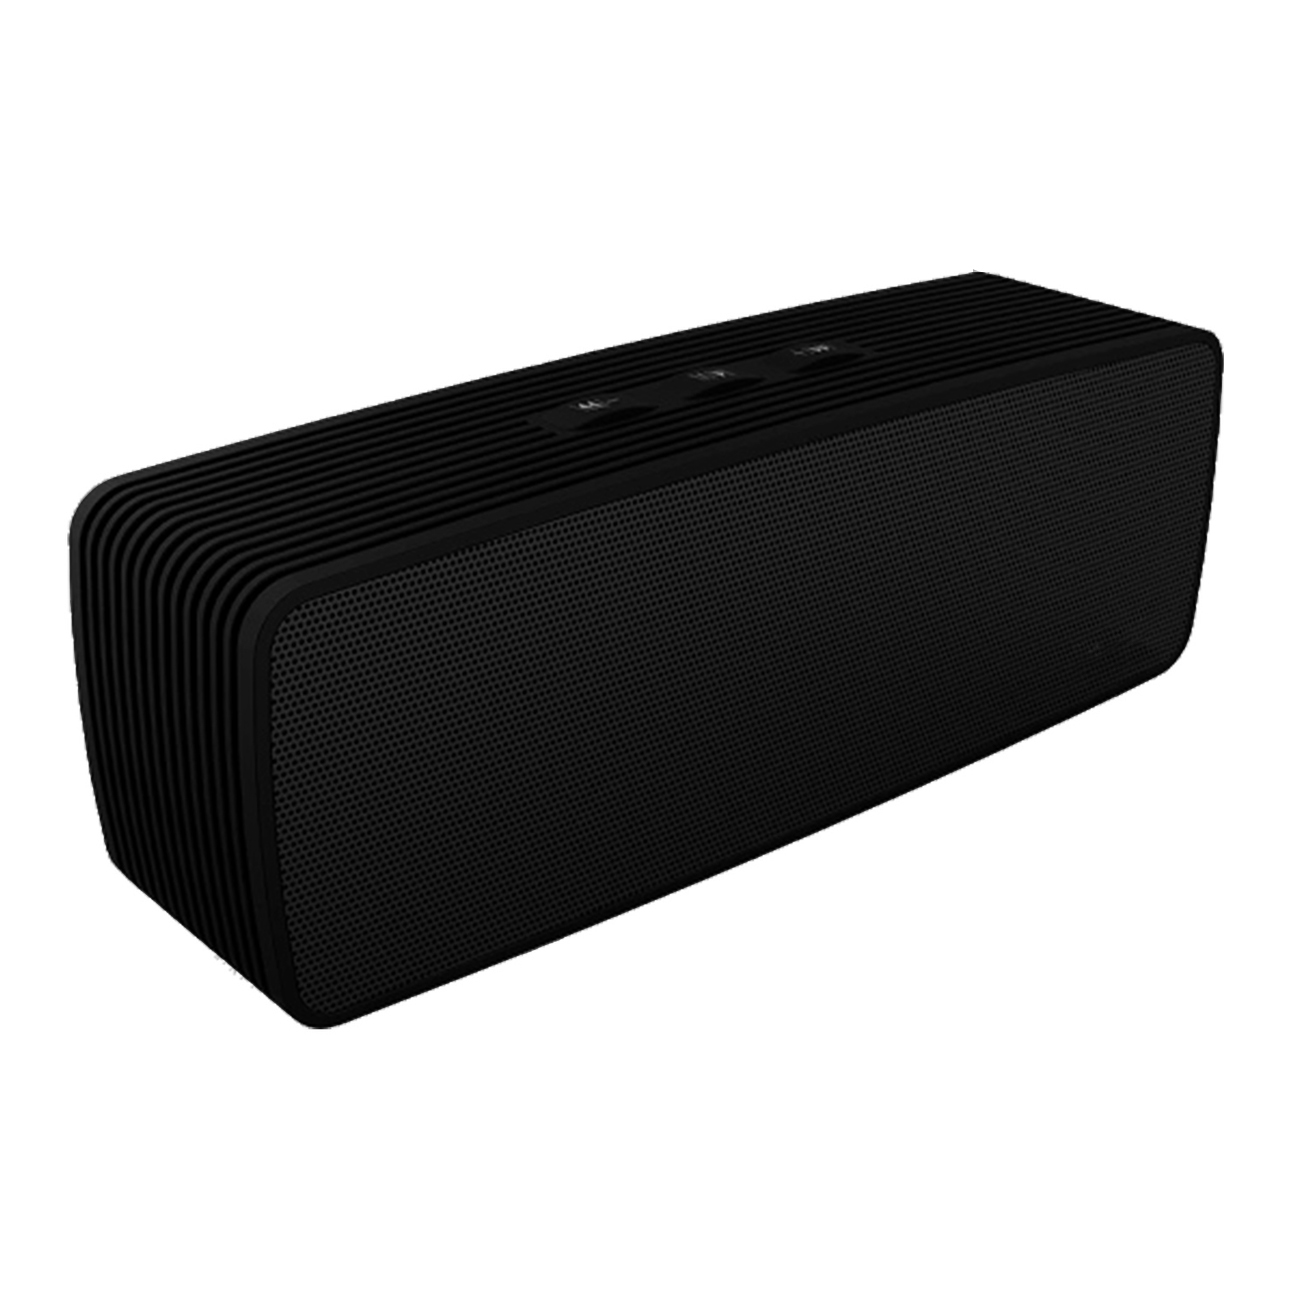 Bocina Bluetooth Speaker Multifuncional Portatil - Orange